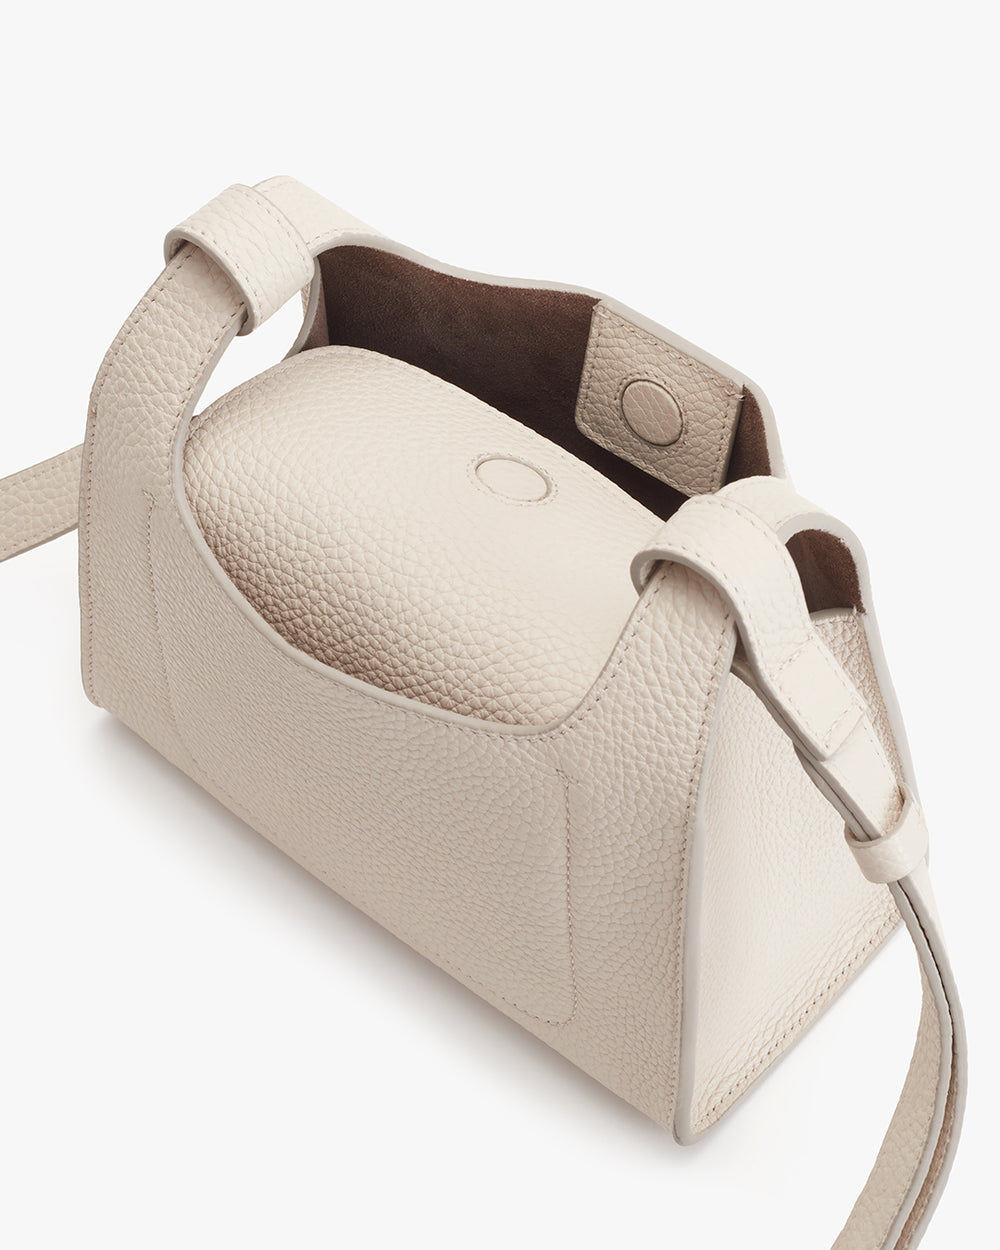 Open handbag with visible interior and a strap